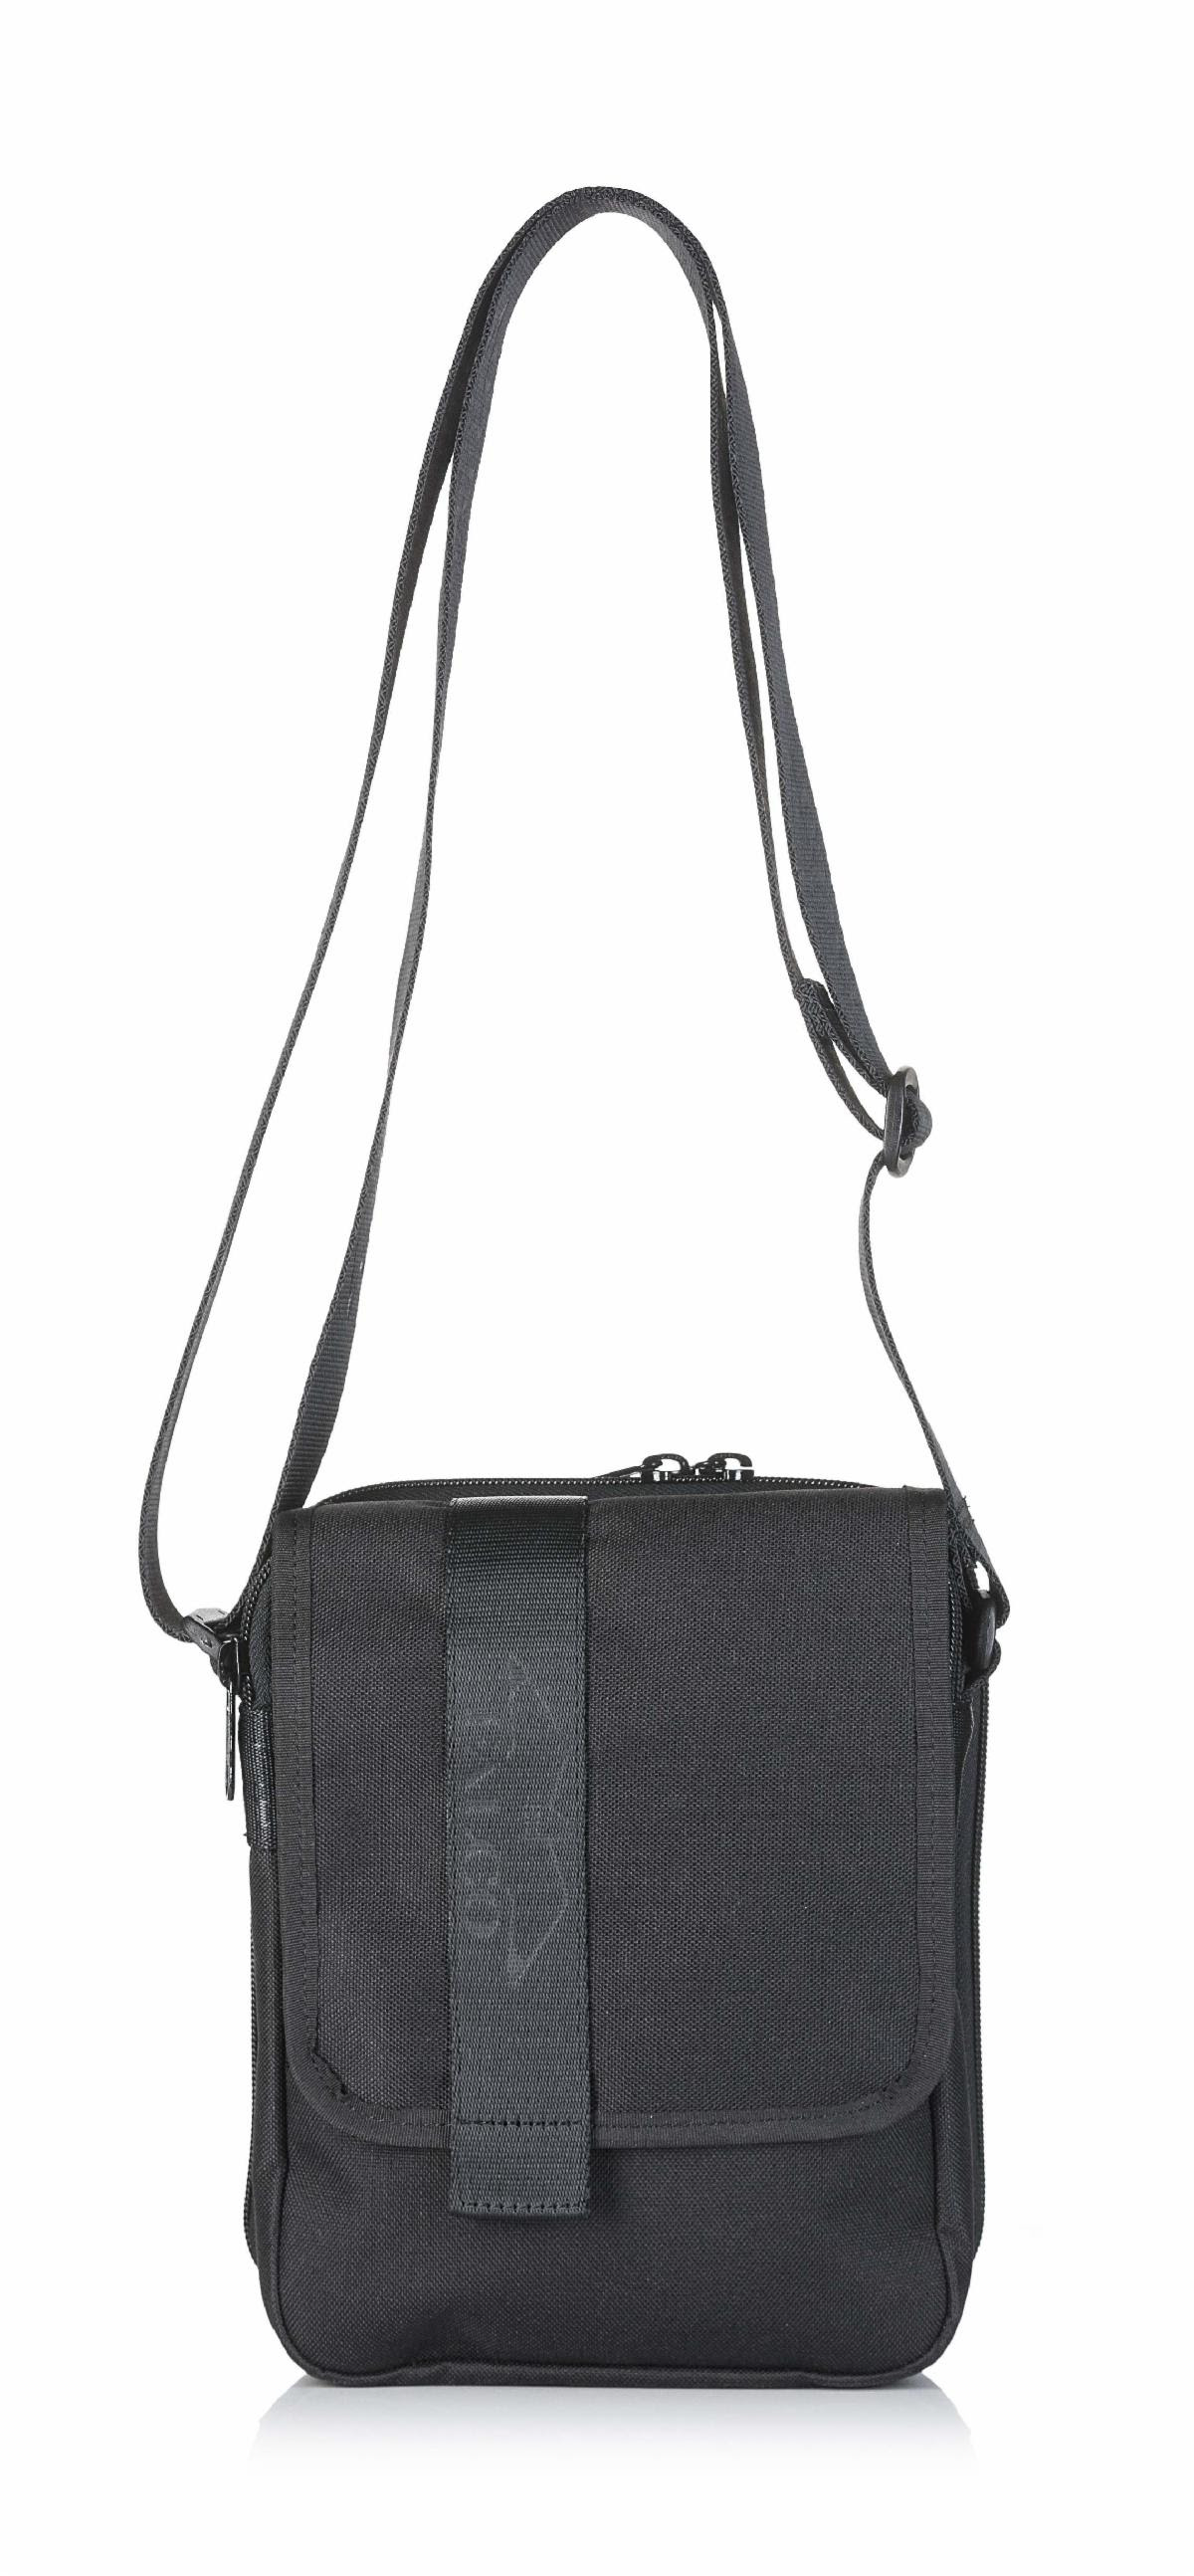 FALCO Holsters Simple Concealed Carry Handgun Bag, Shoulder Bag